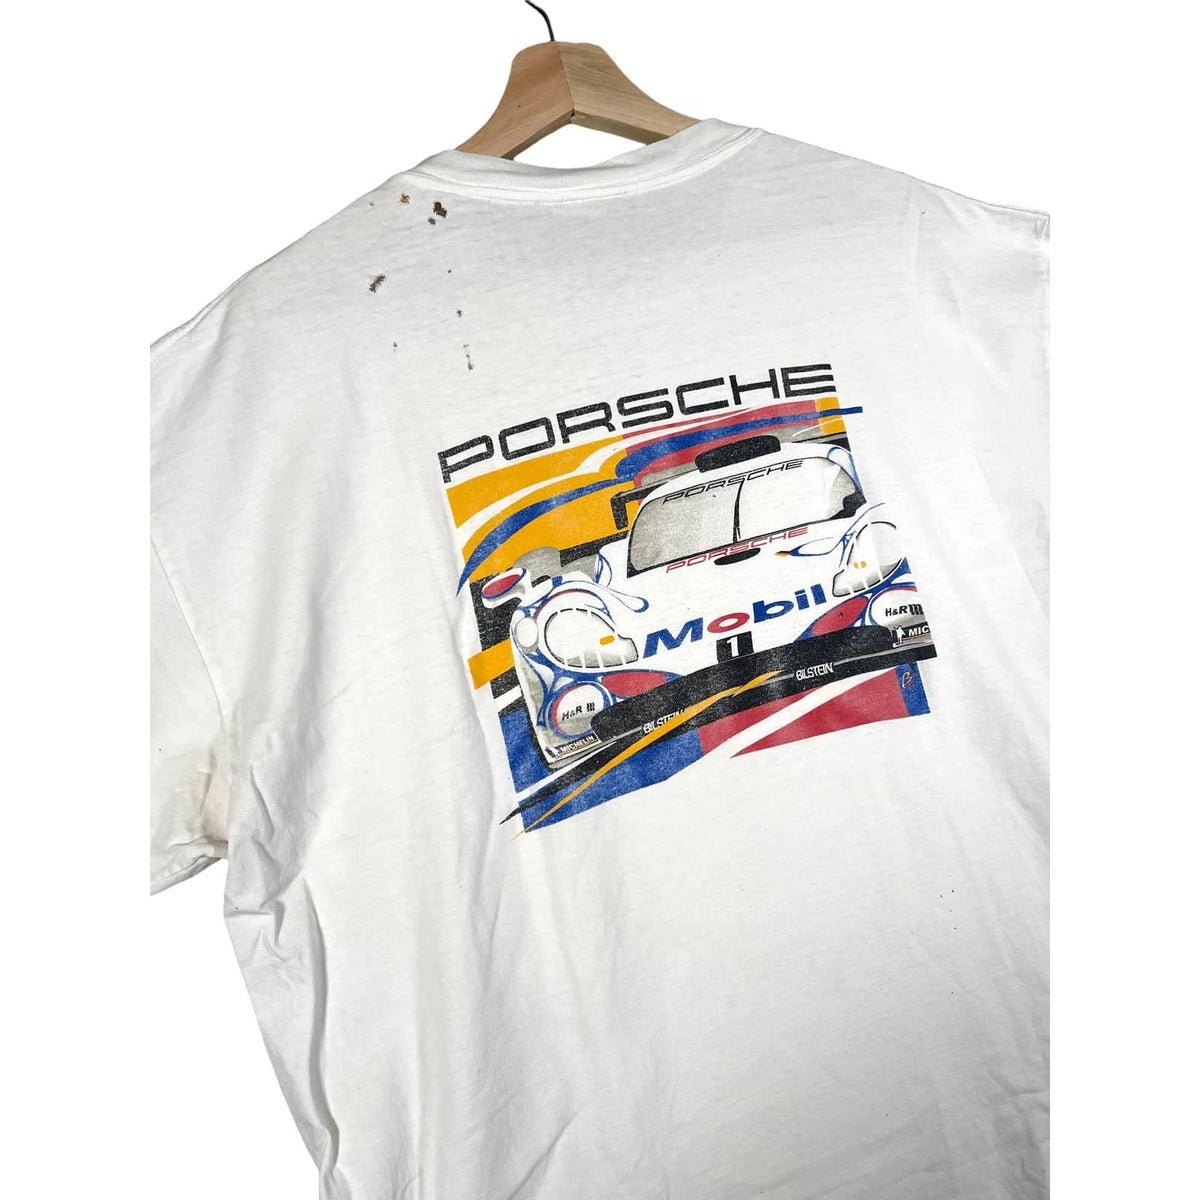 Vintage 1990's Porsche Distressed Cup Series Racing T-Shirt